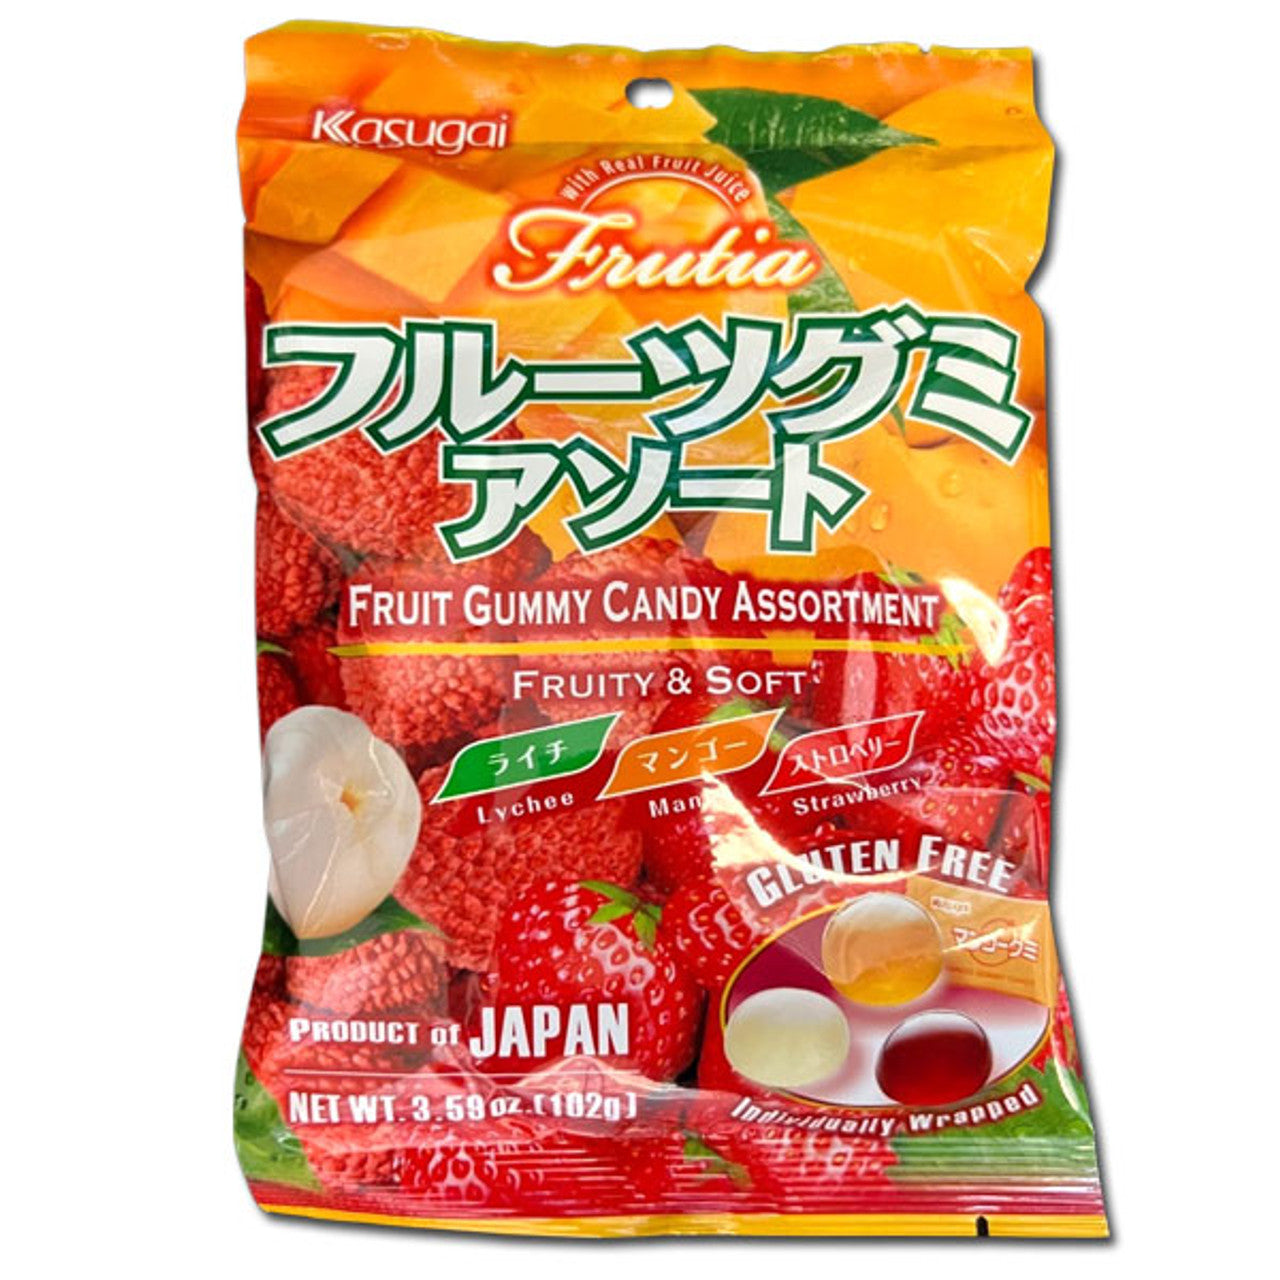 Kasugai Lychee, Mango, Strawberry Gummi 3.59oz